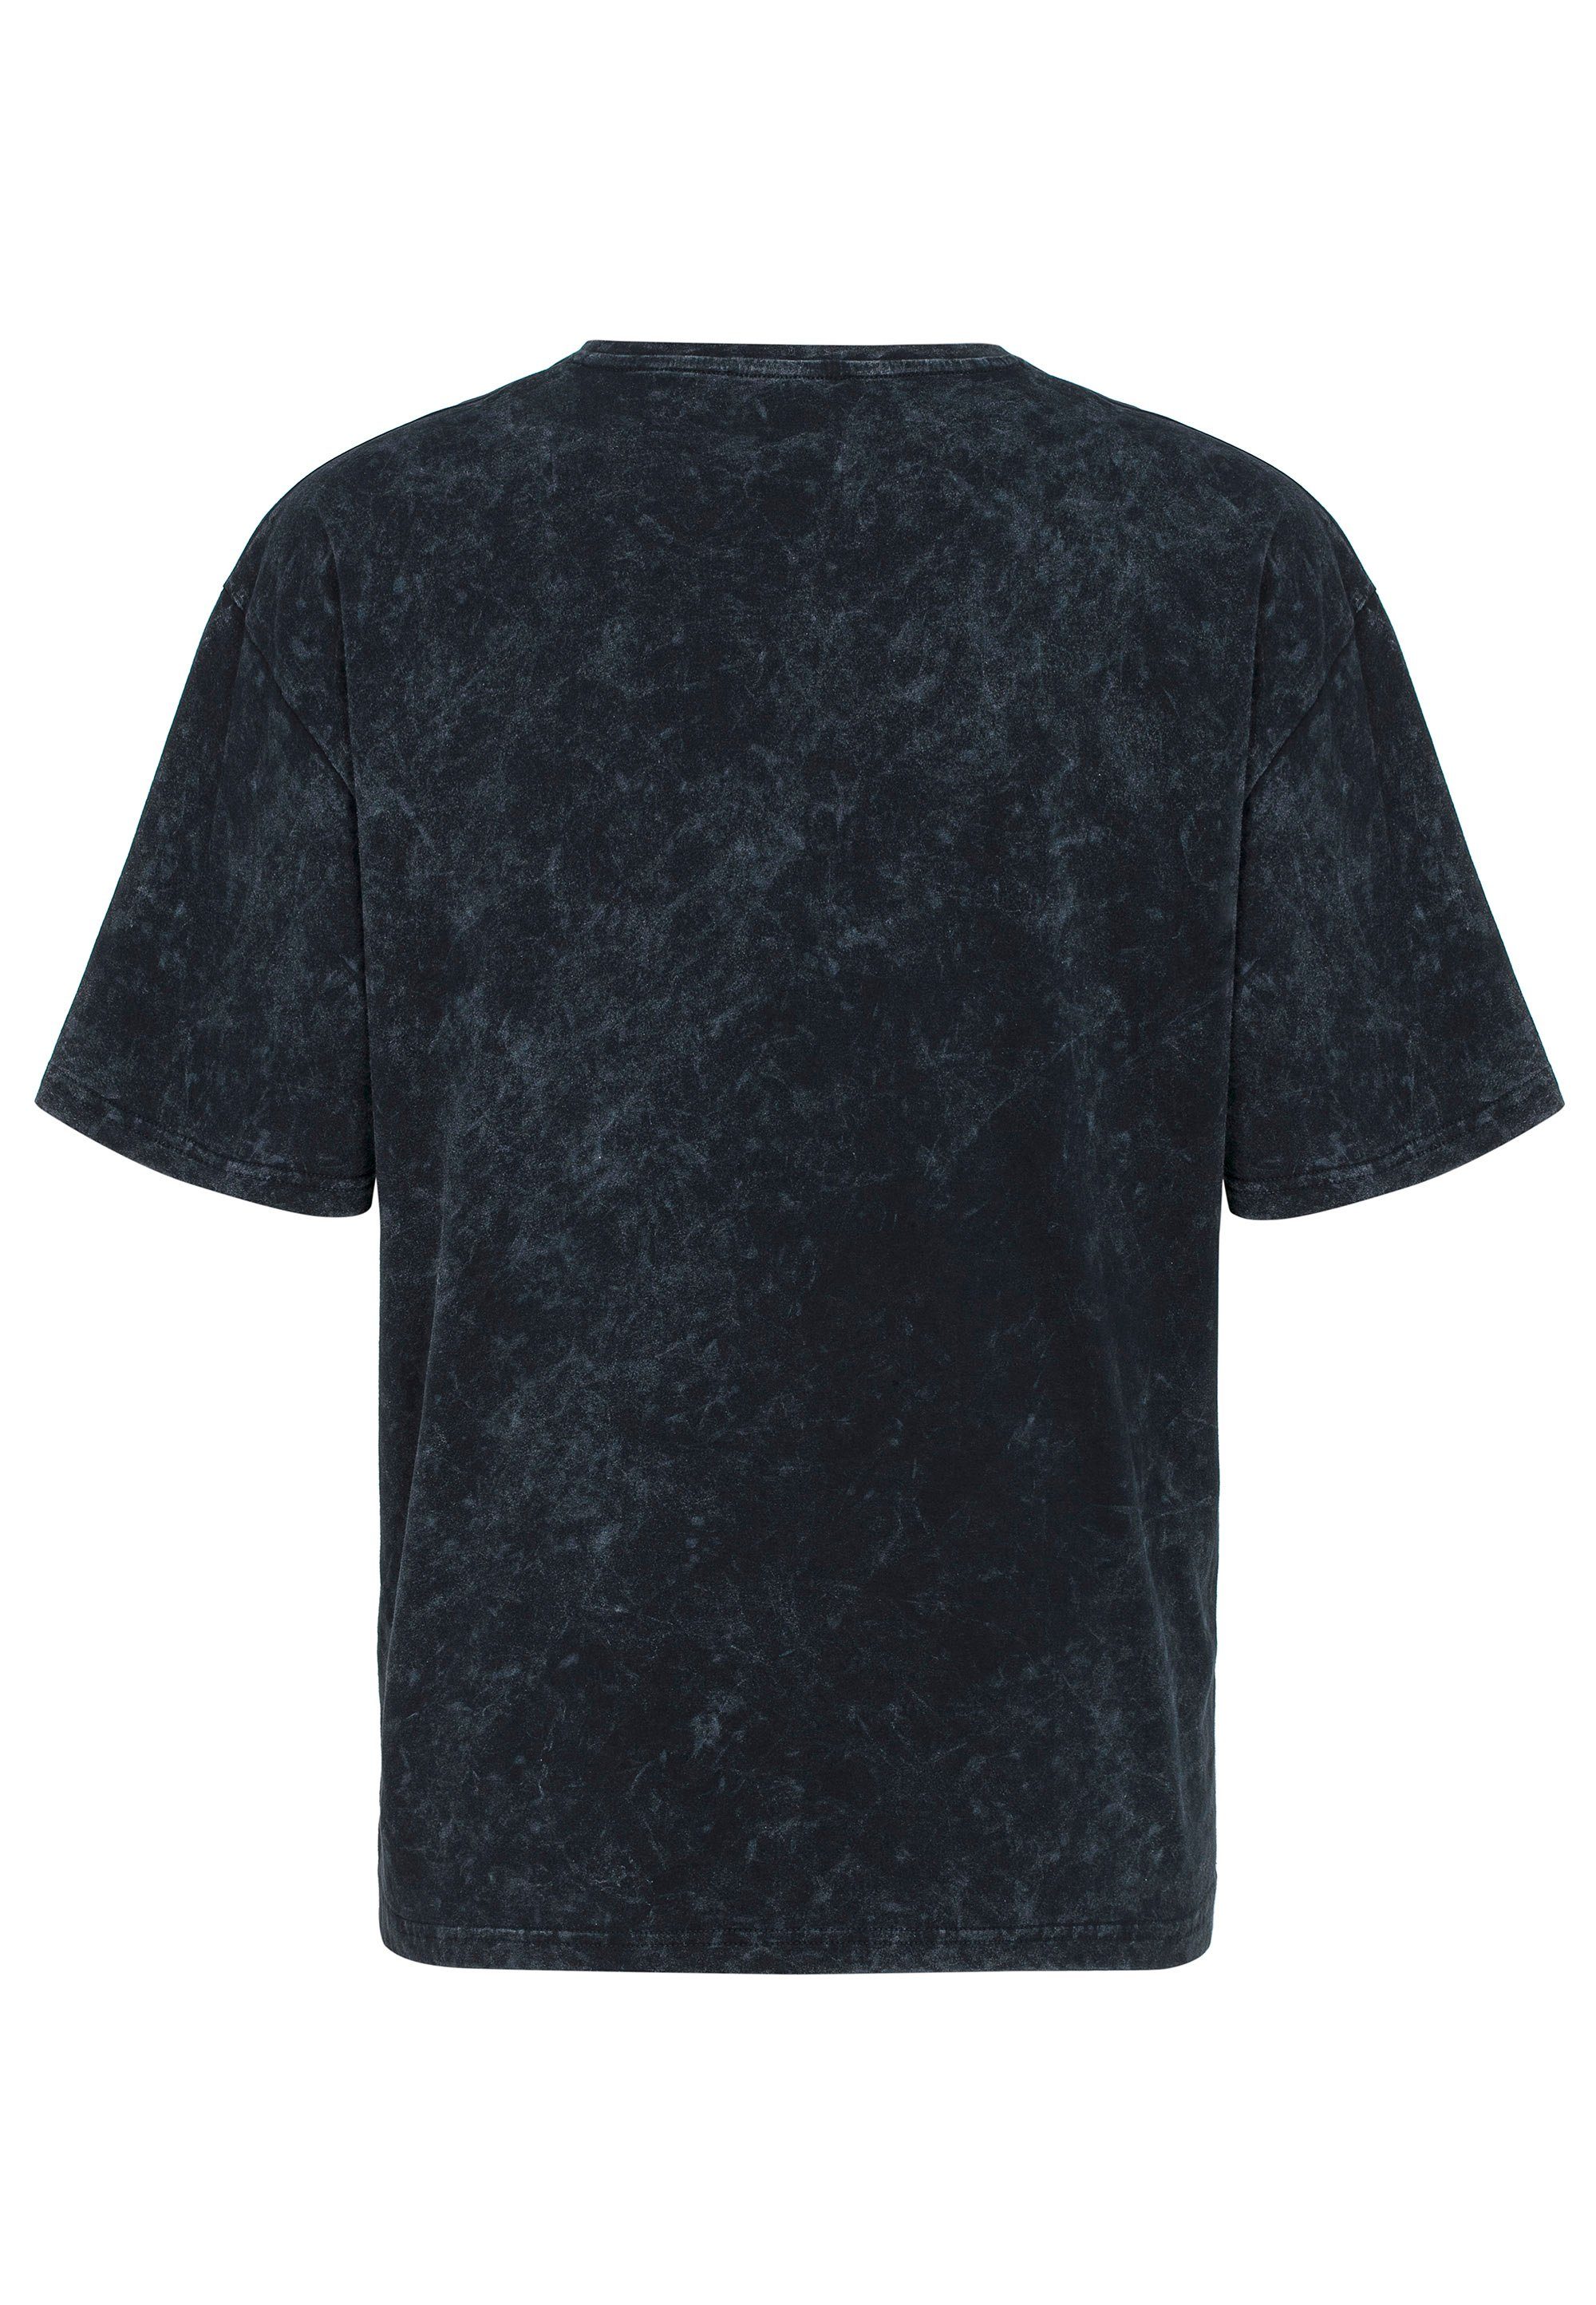 RedBridge T-Shirt dunkelblau trendigem Vista Batik-Design in